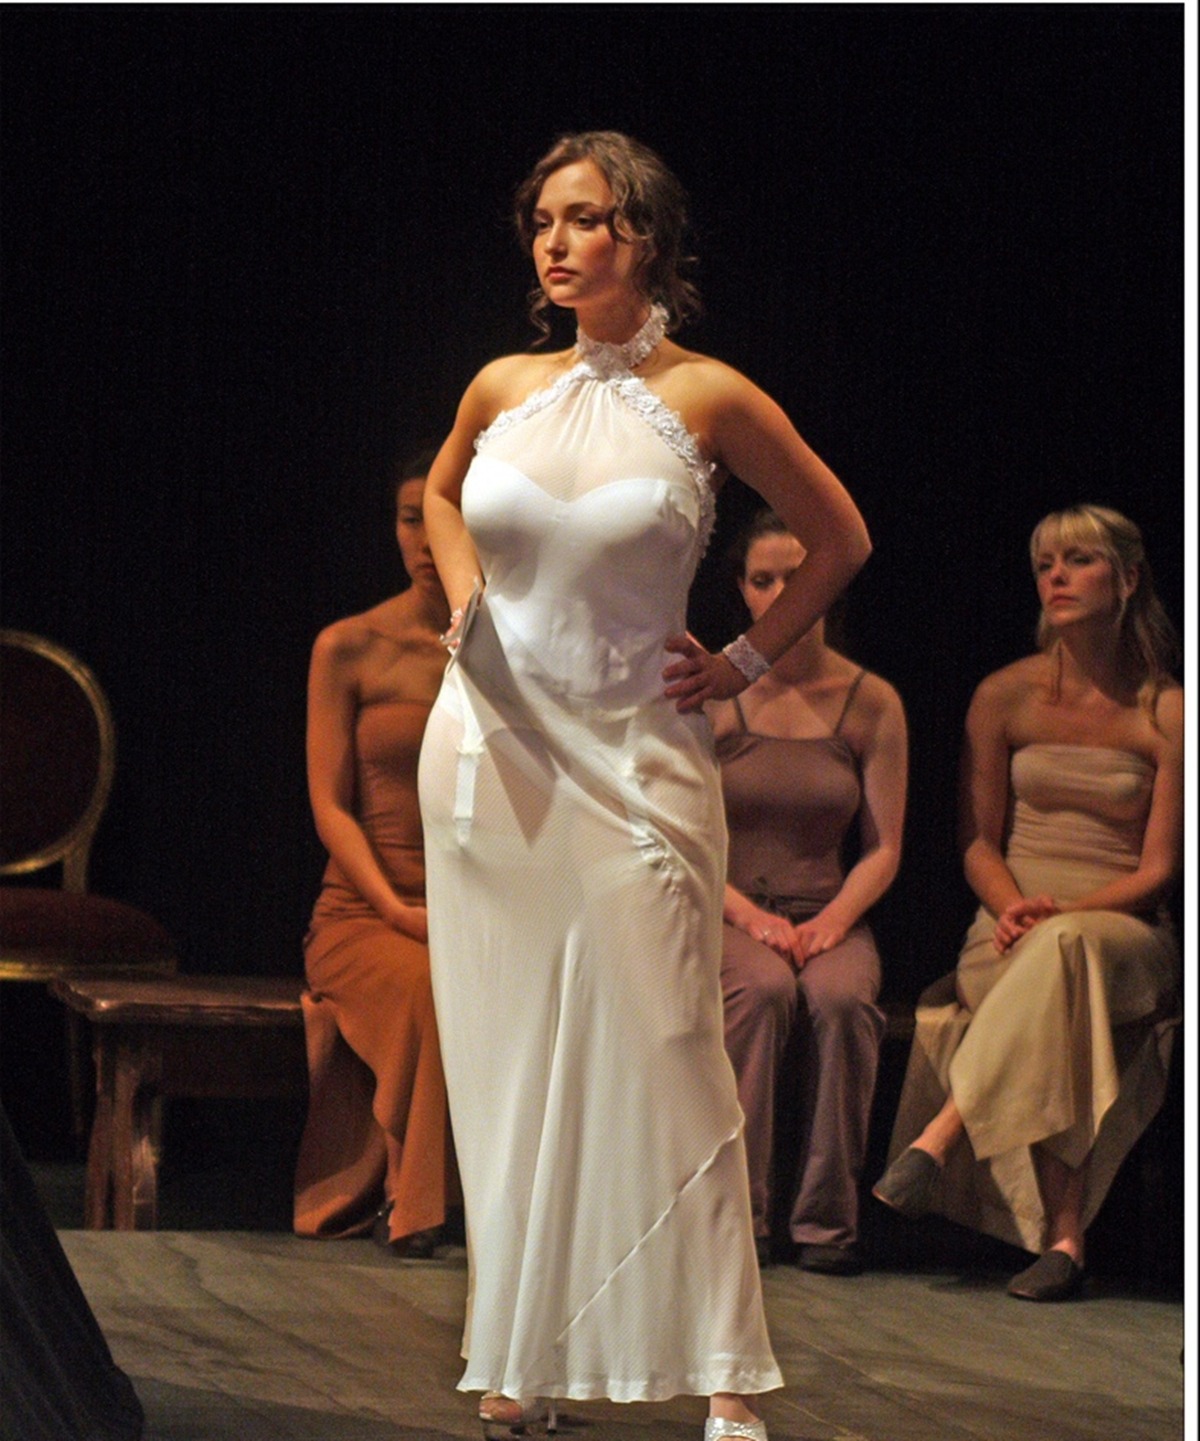 petergriffin19:  Milana Vayntrub in a sheer dress